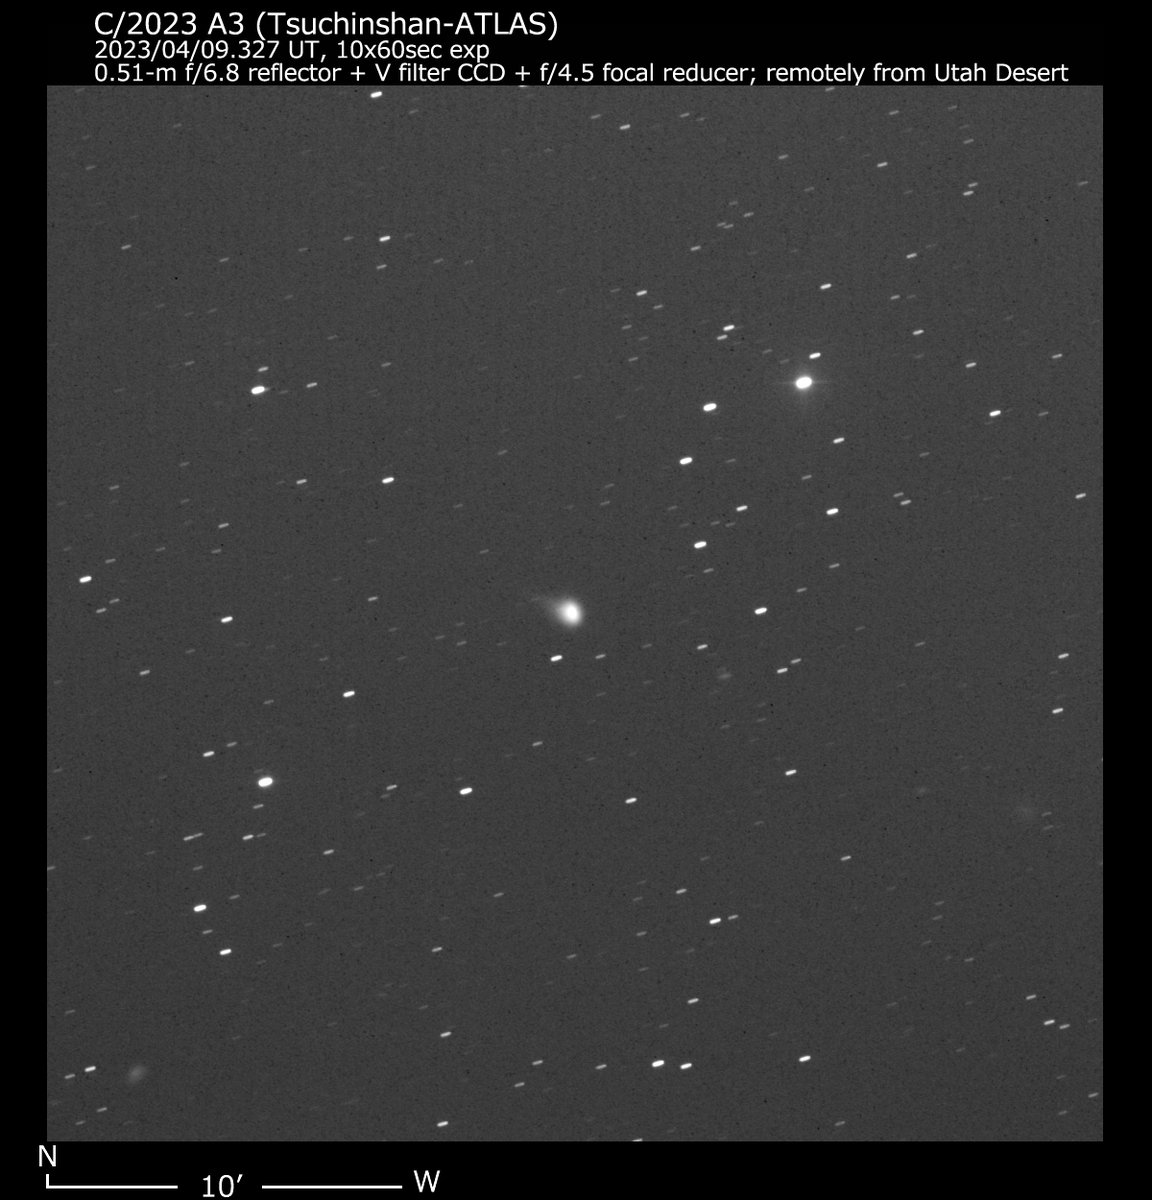 C/2023 A3 (Tsuchinshan-ATLAS)
Apr. 09.33, 11.0V, 1'.4 (0.51-m f/6.8 reflector + V filter CCD + f/4.5 focal reducer; remotely from Utah Desert);
comparison stars used APASS Vmag.